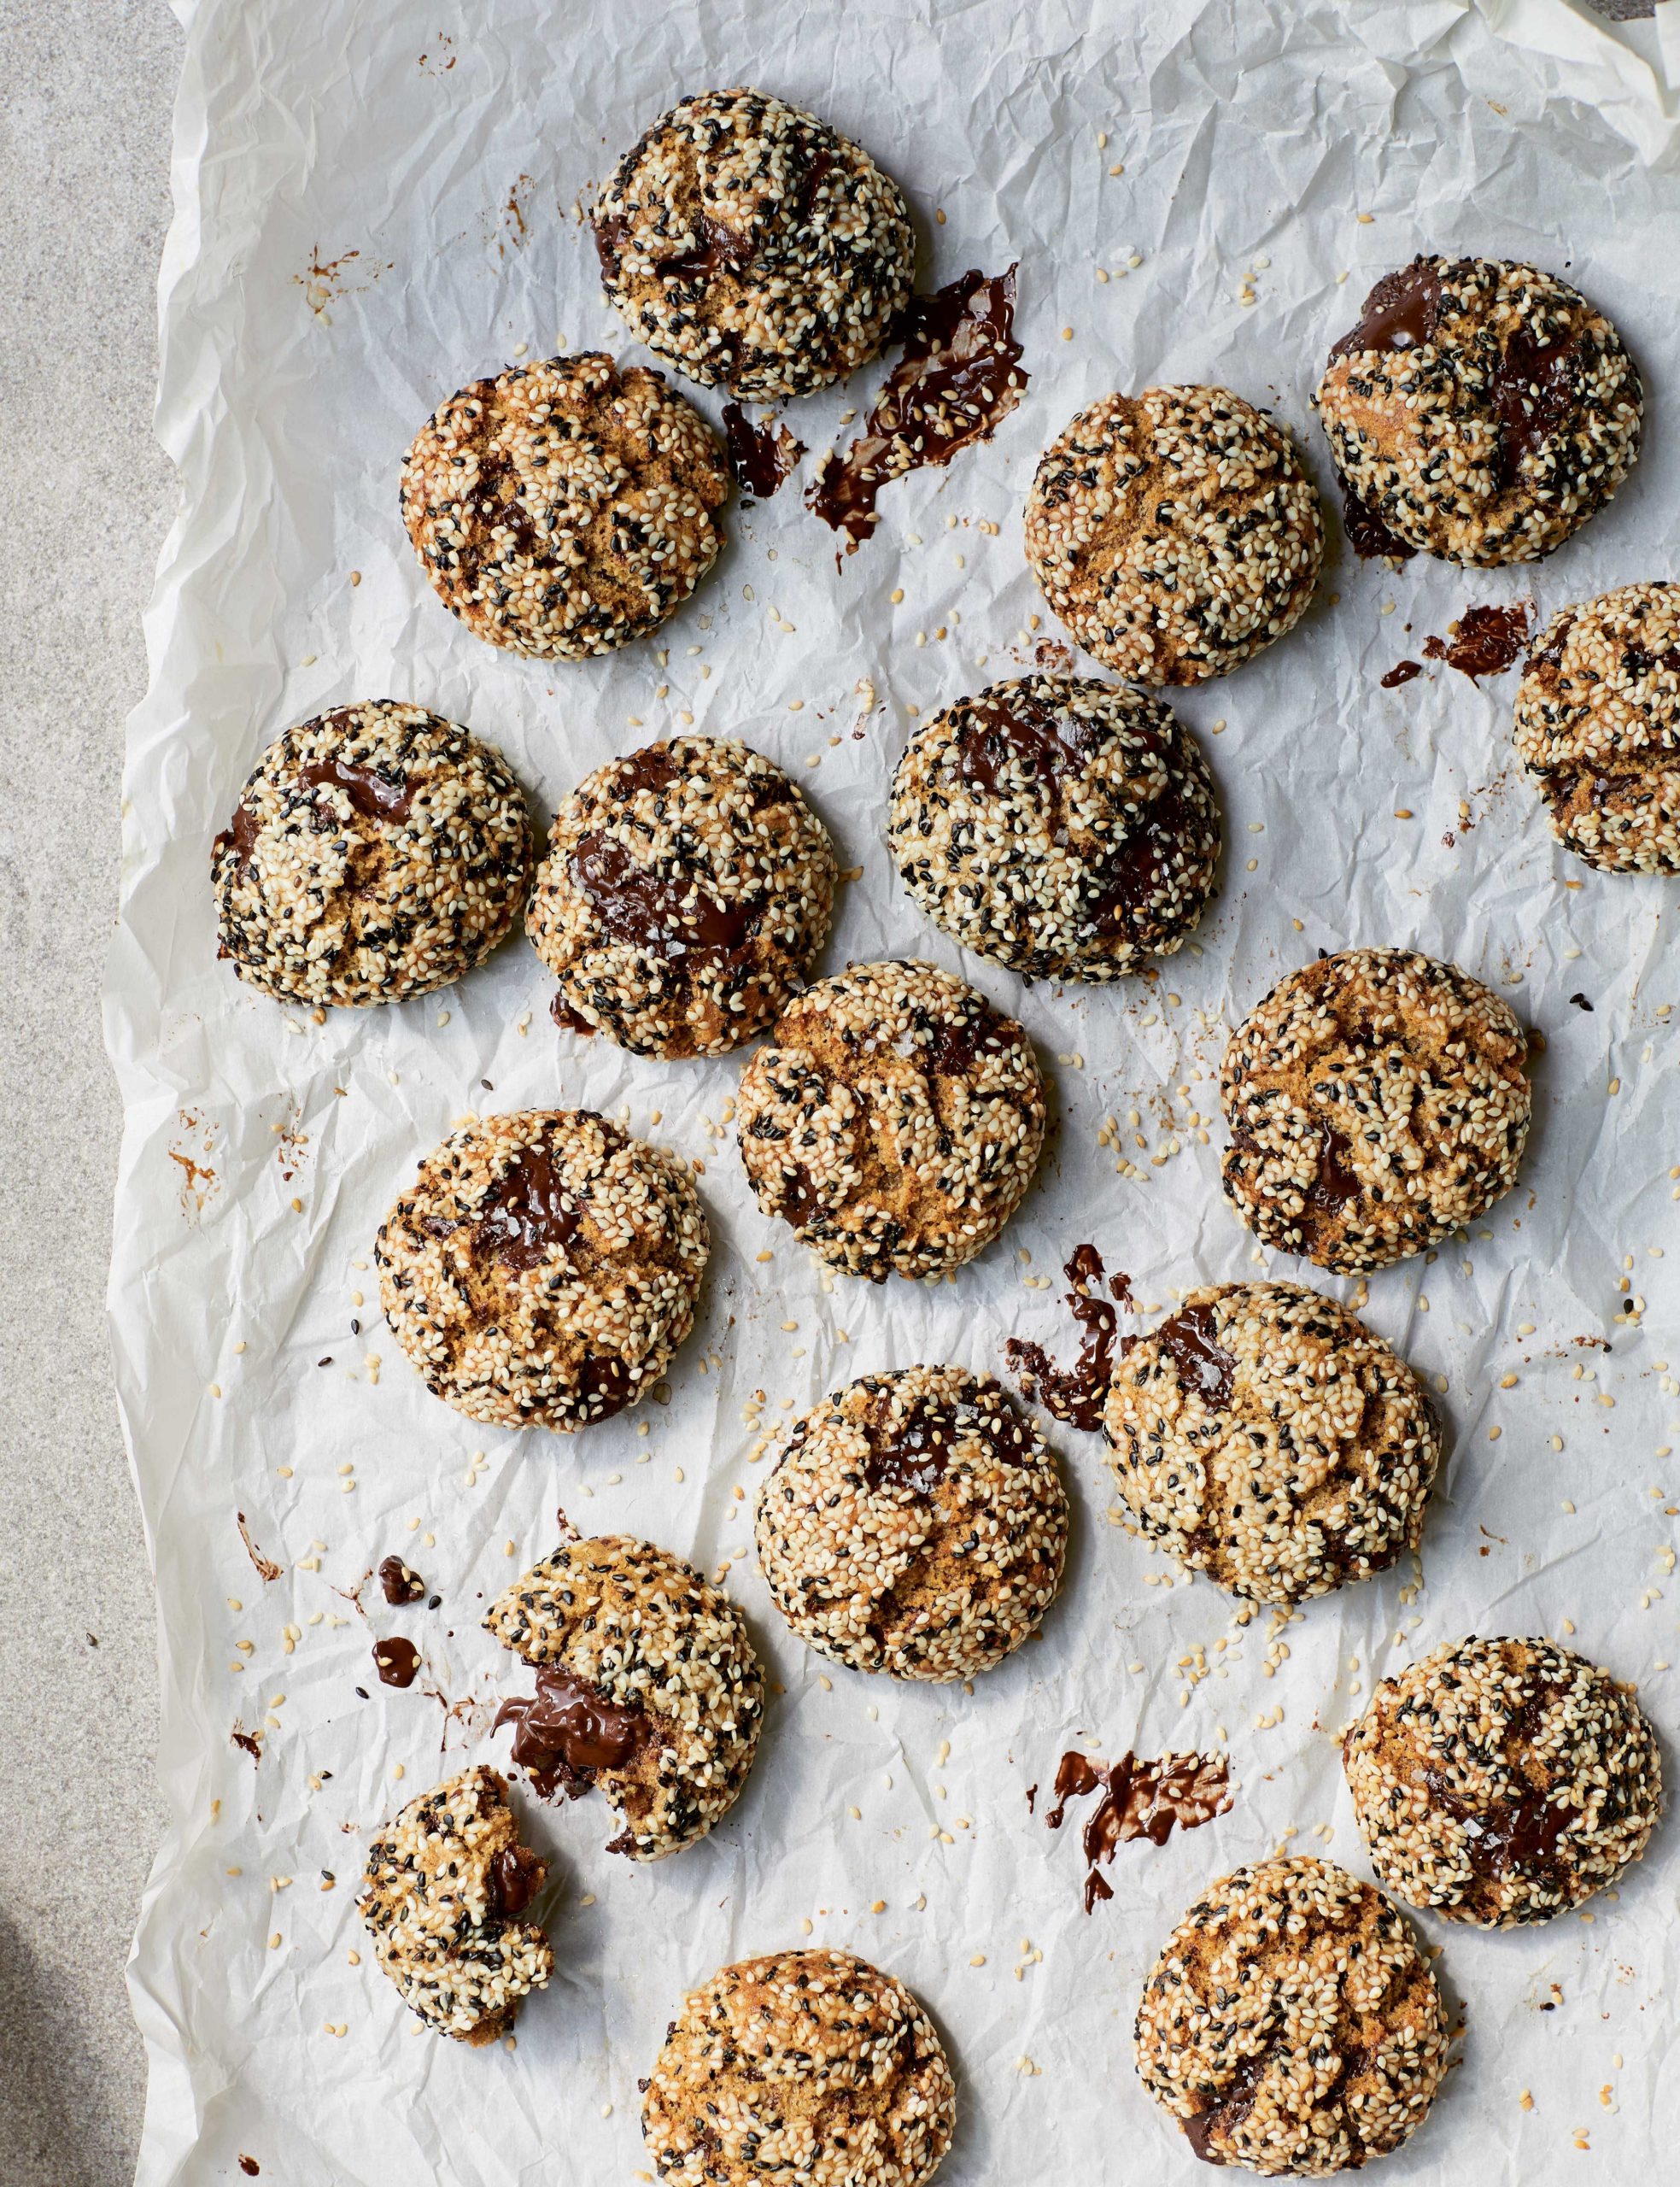 Melissa Hemsley's Tahini & Chocolate Chip Cookies | Healthy Baking Recipe